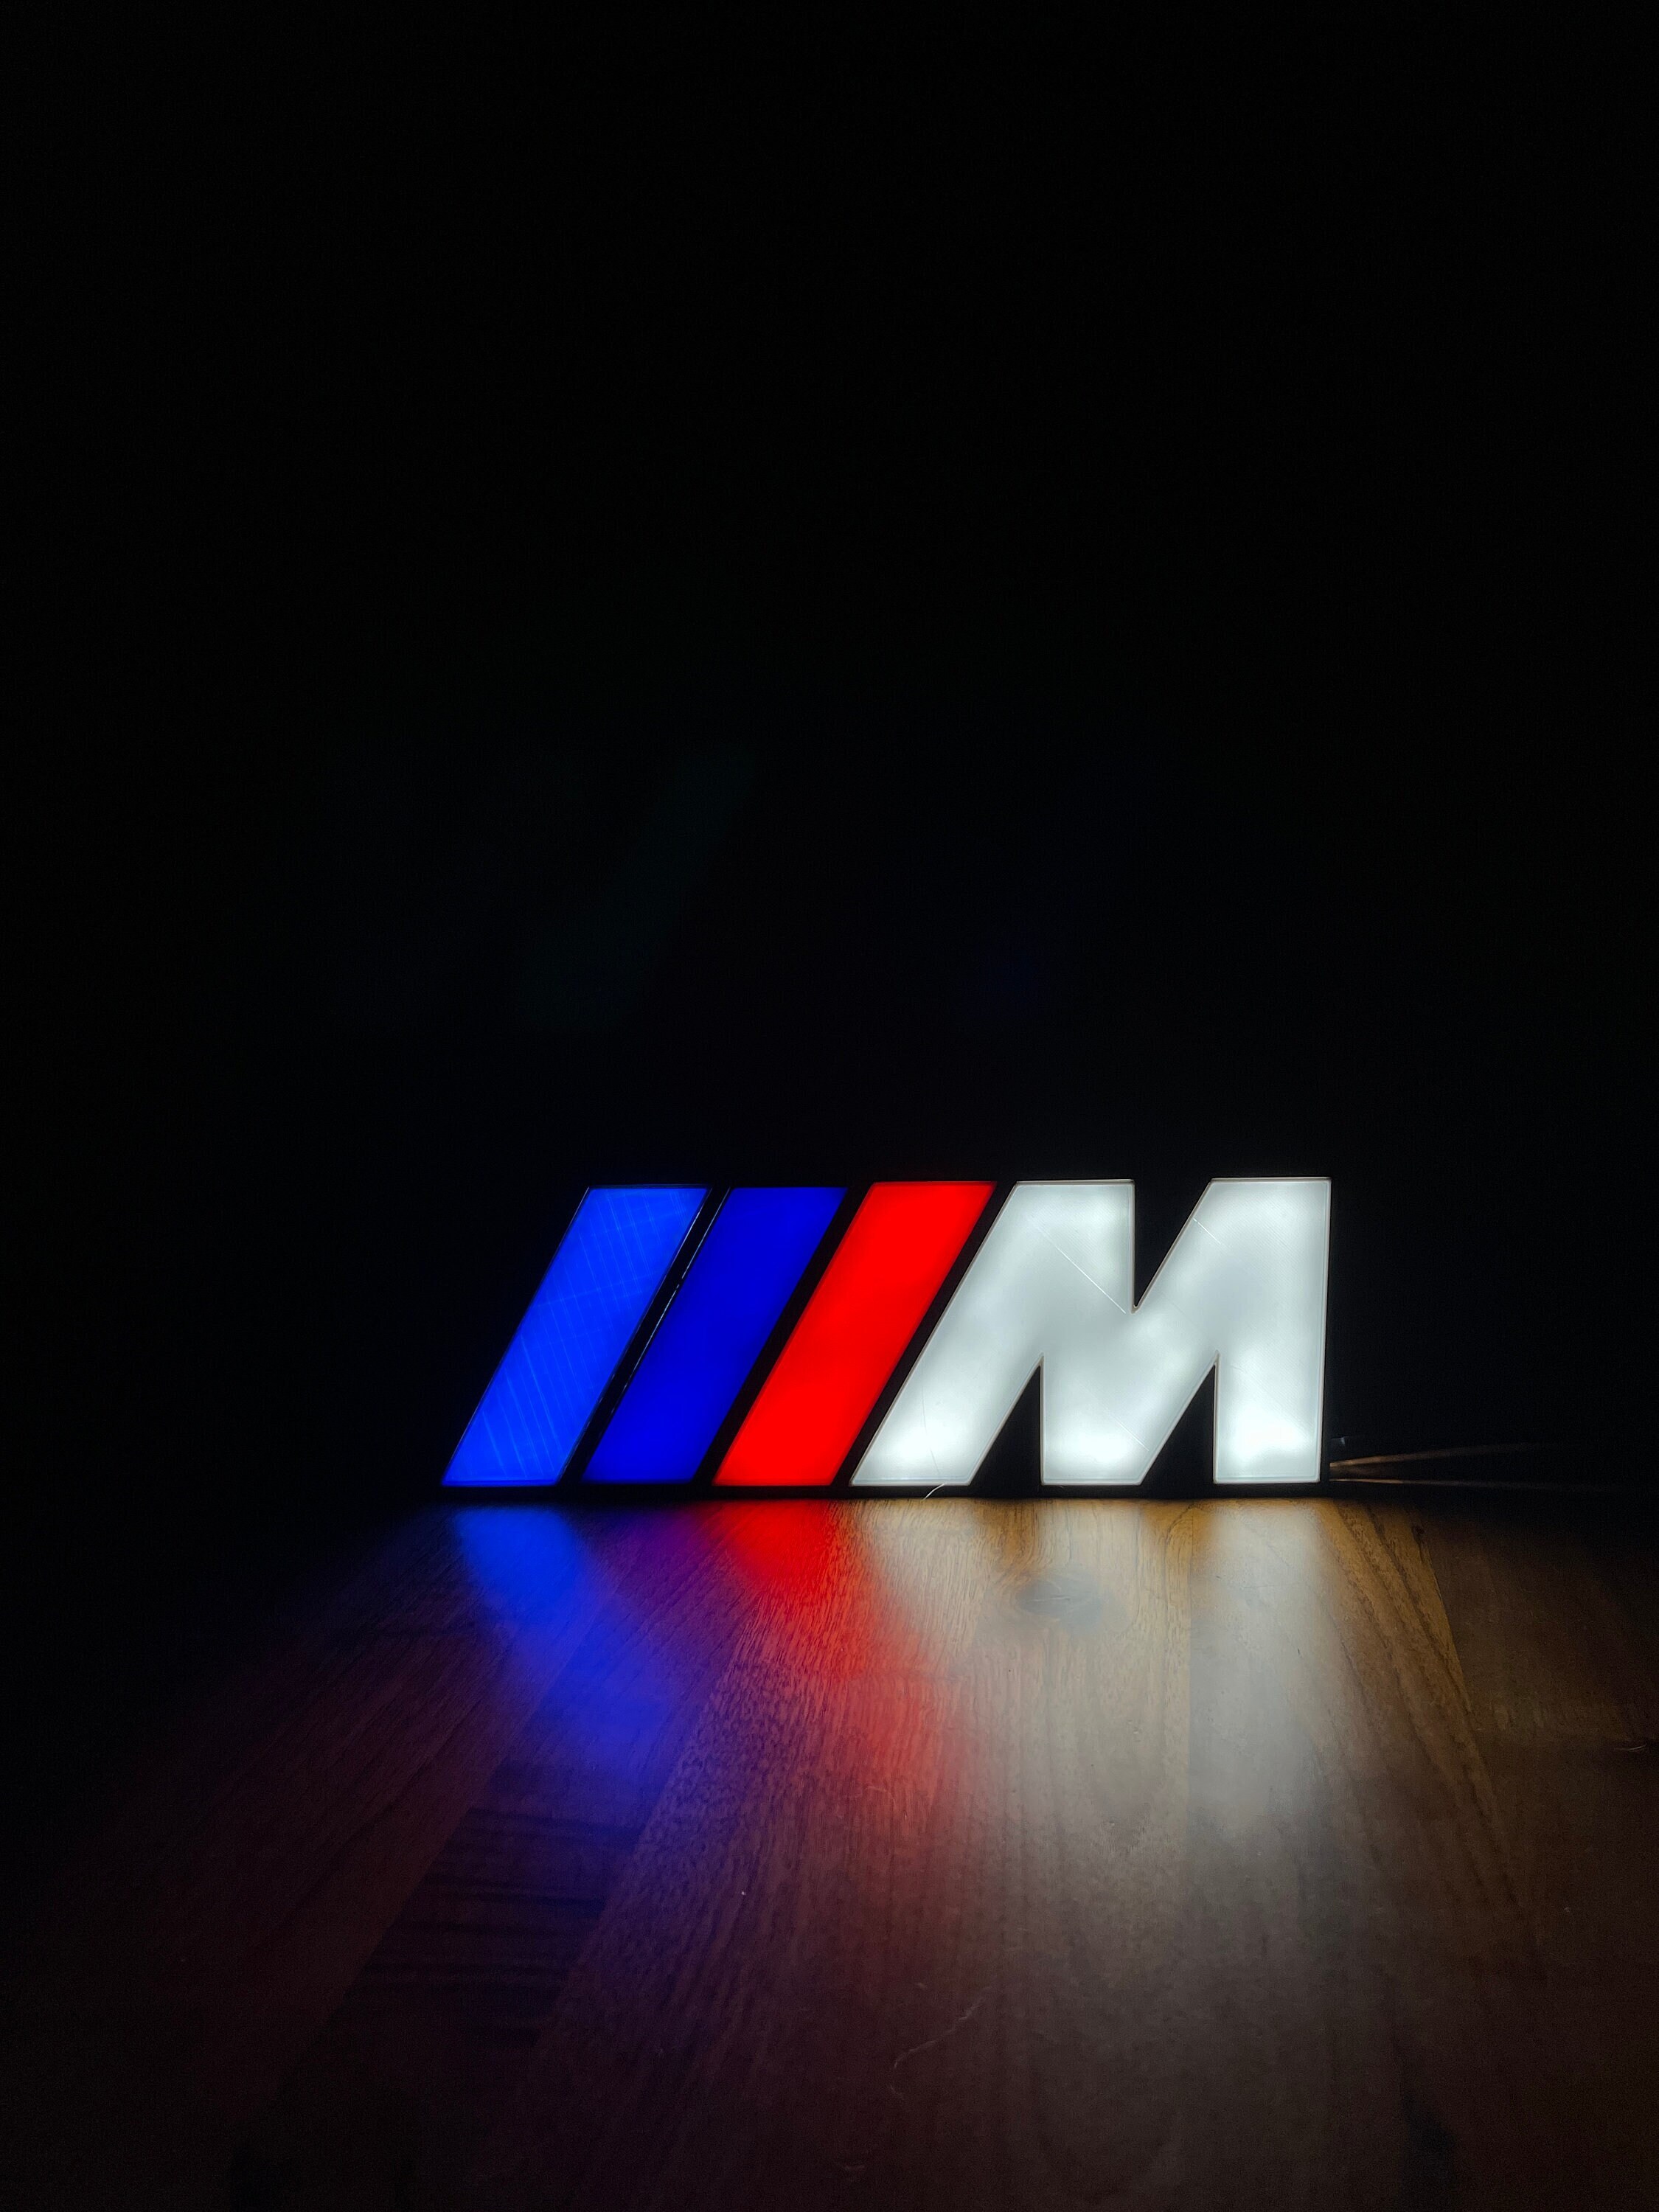 BMW BADGE LED ILLUMINATED WALL LIGHT SIGN GARAGE AUTOMOBILIA M POWER M3 M4